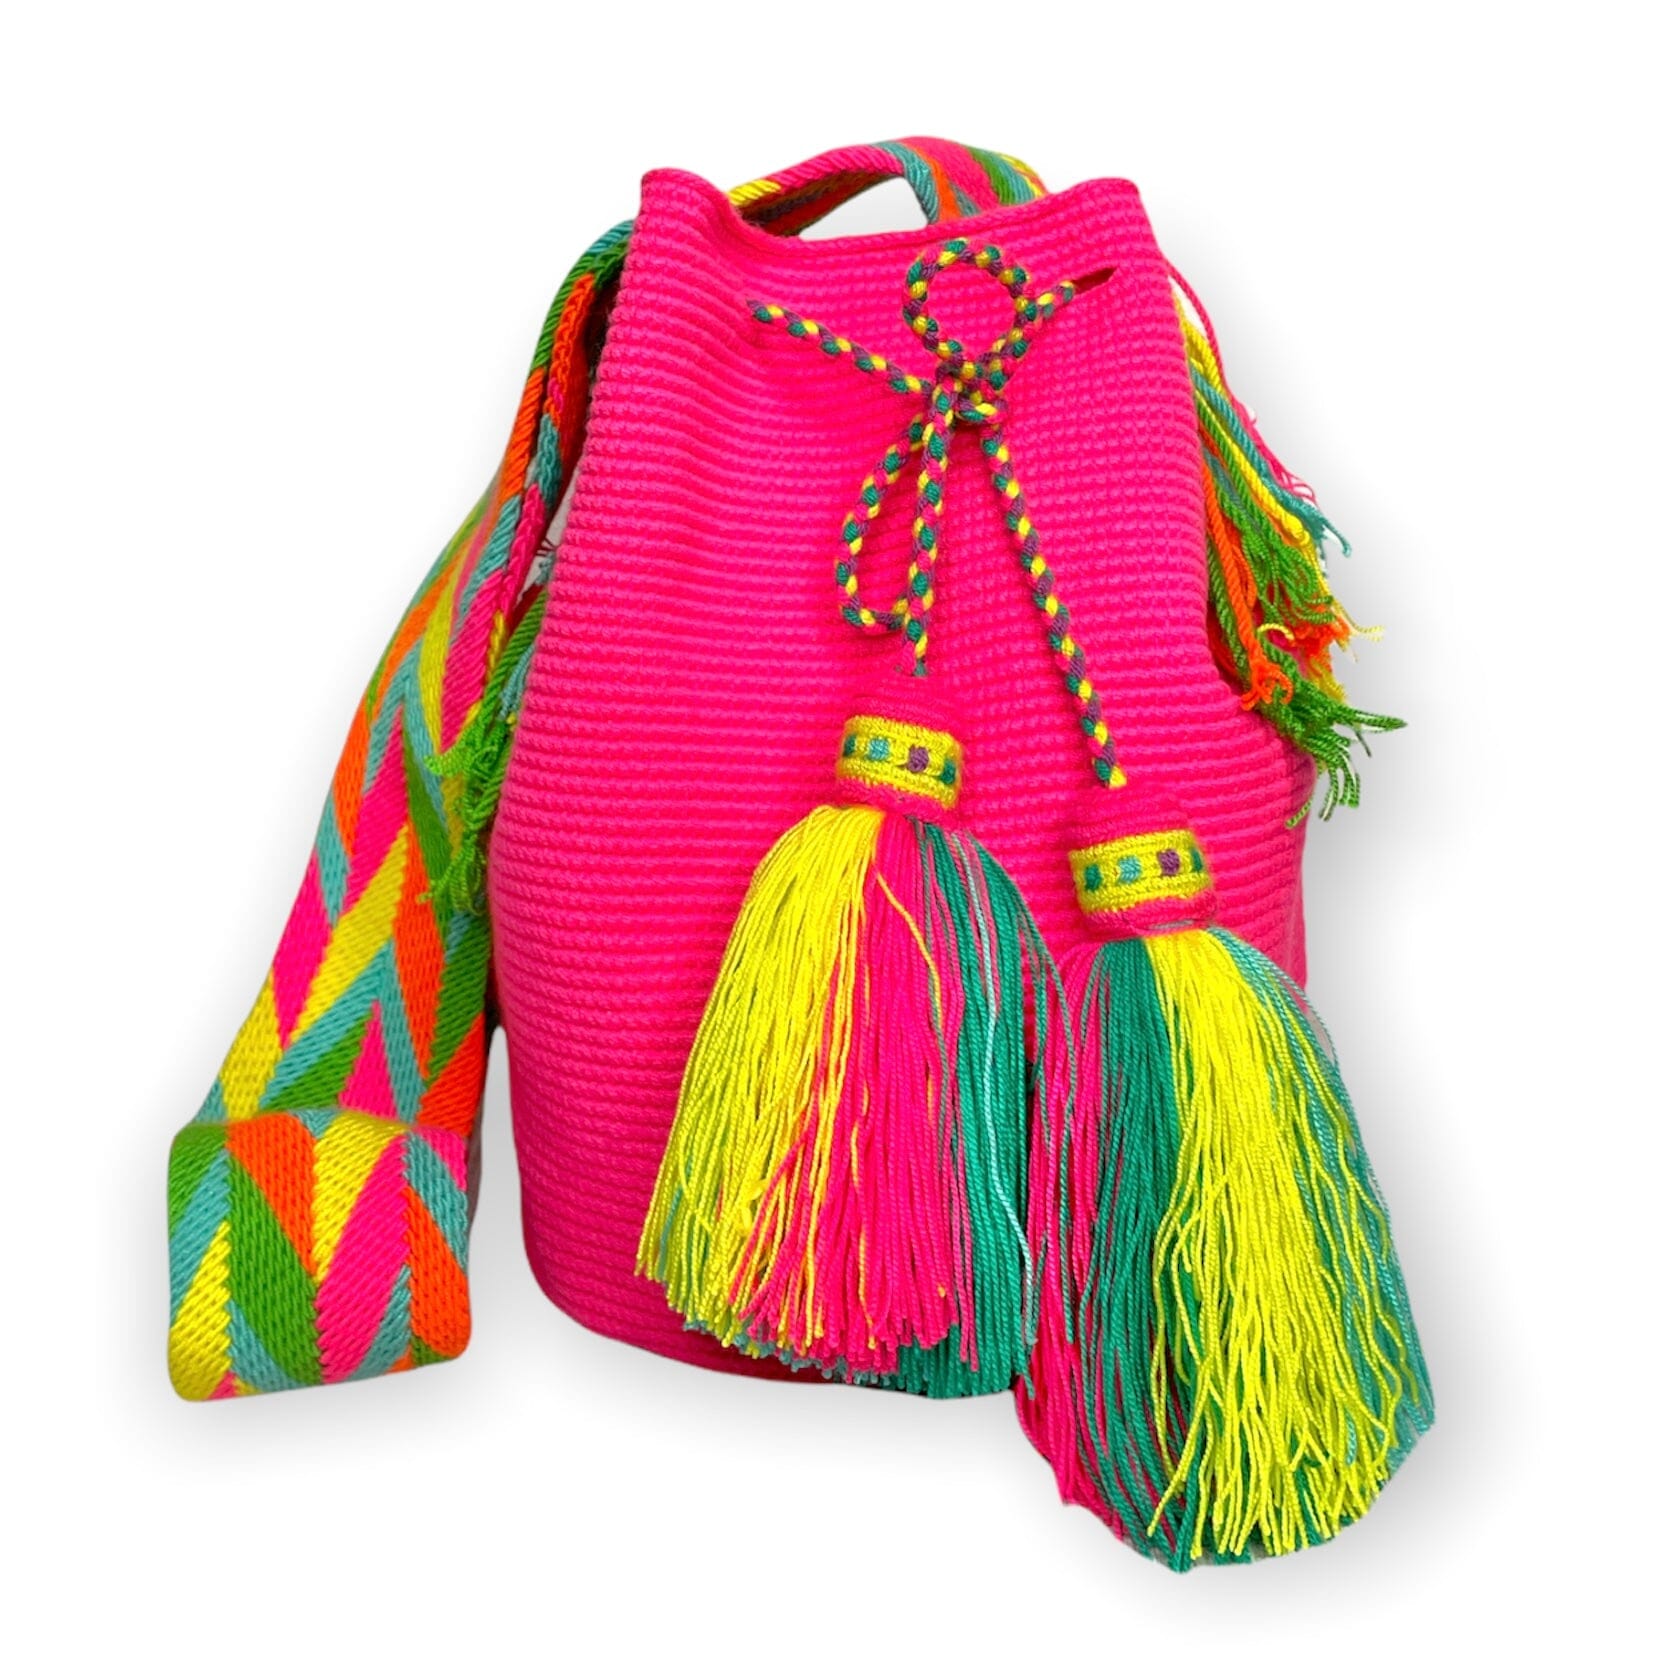 Shop Colorful Beach Bags | Bohemian Crossbody Bag for Summer | Colorful 4U